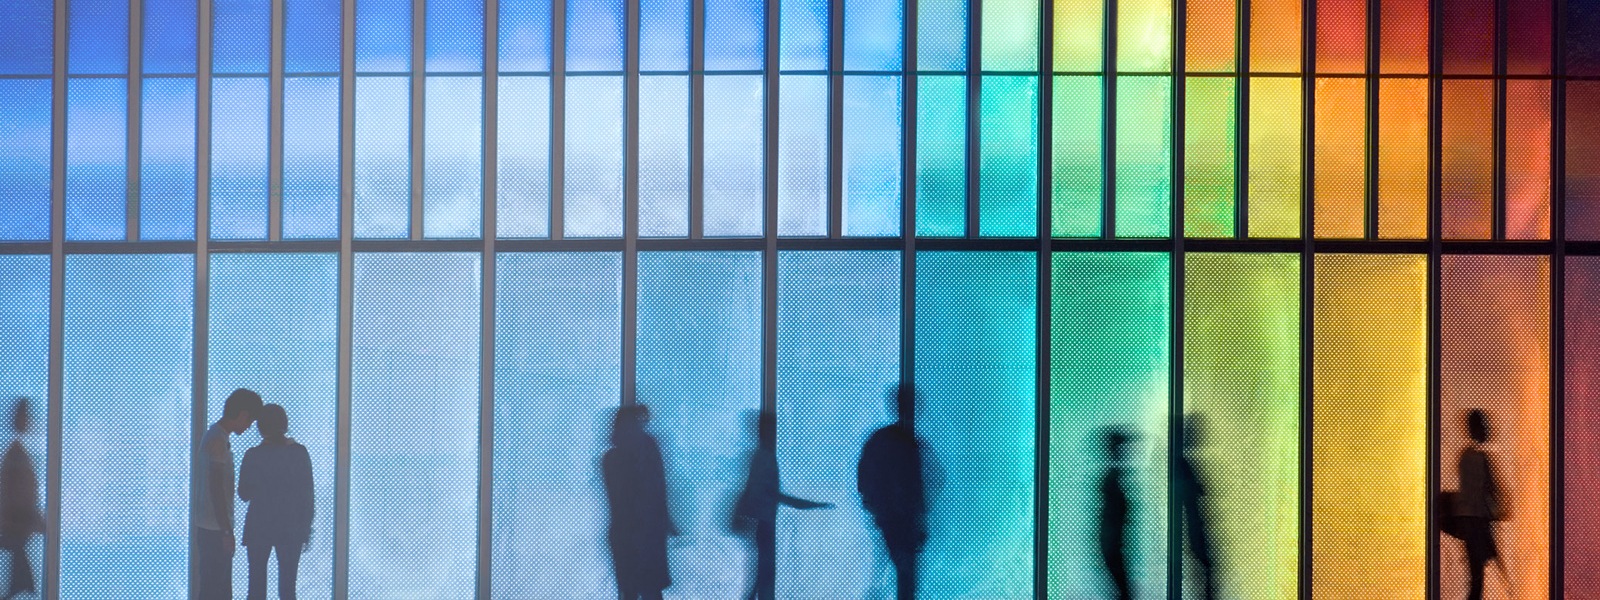 Personas frente a una fachada colorida iluminada con ledes
